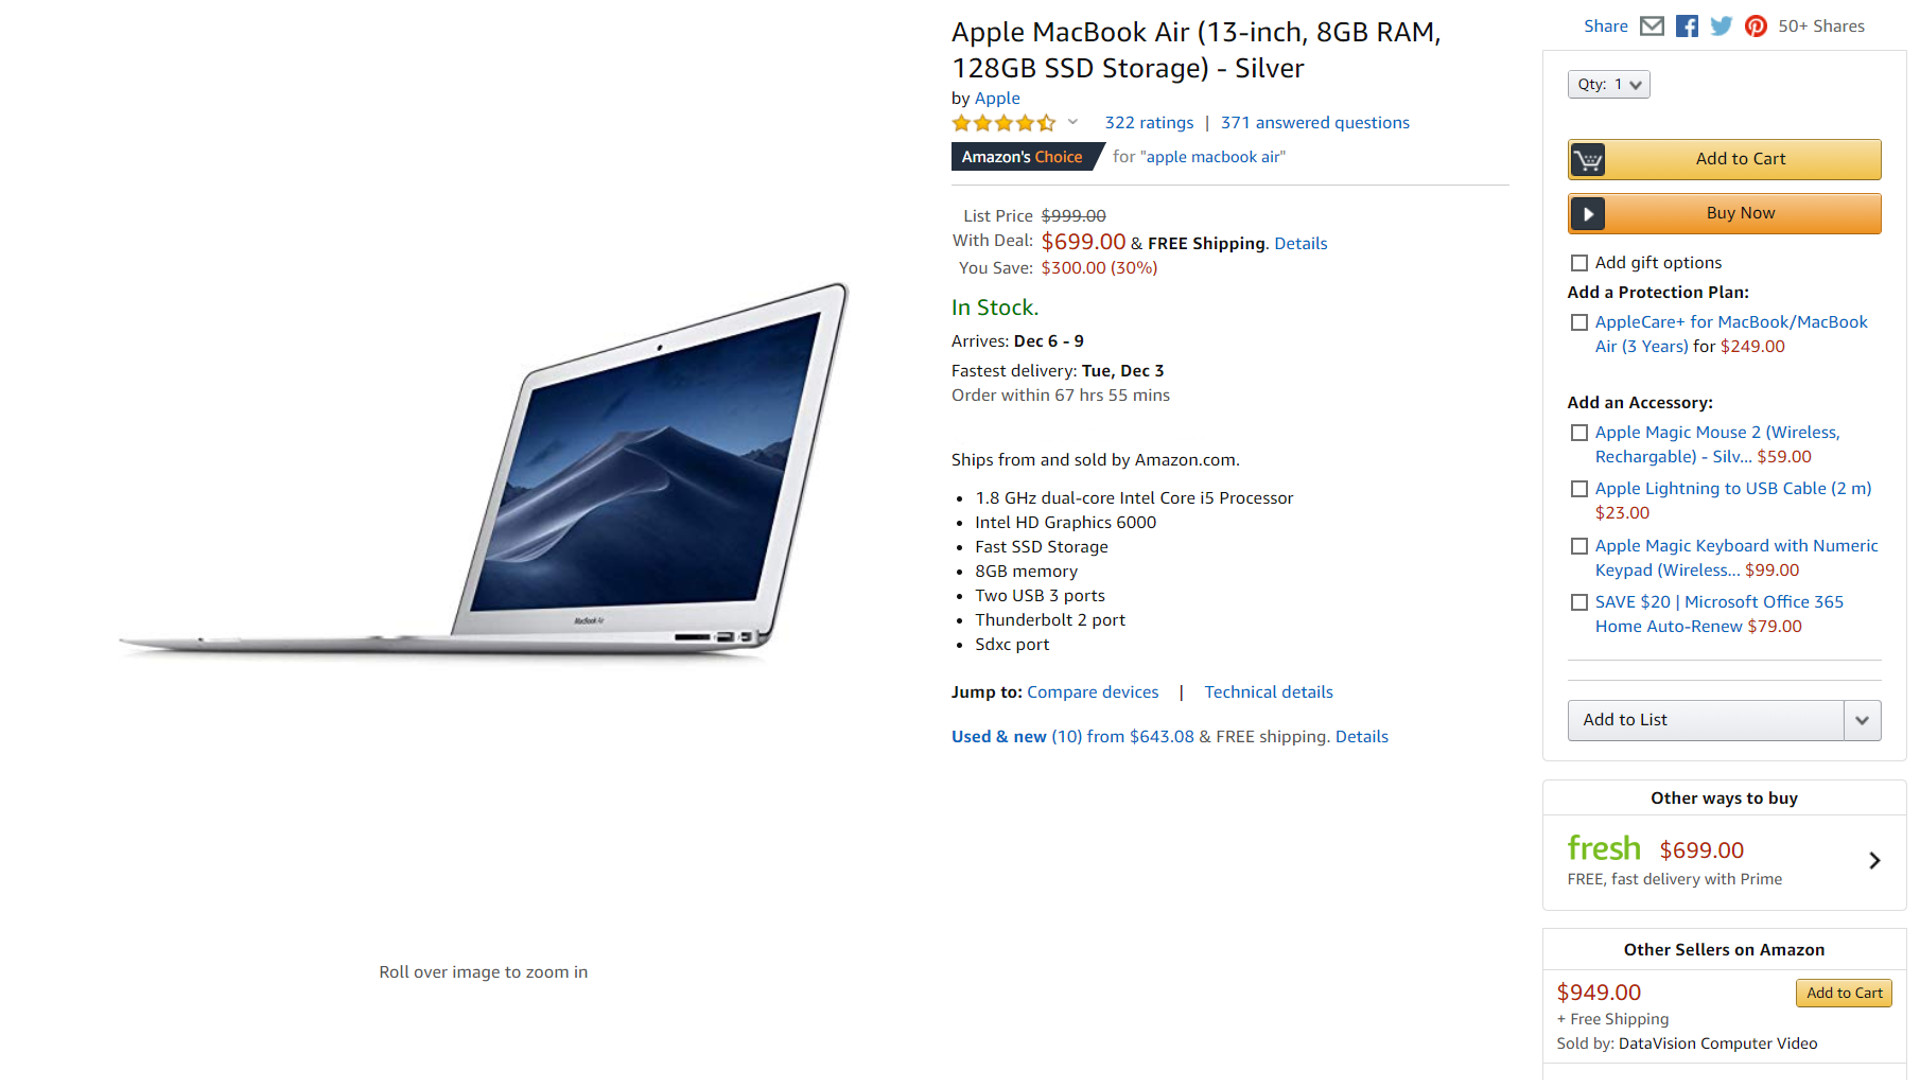 The Apple Macbook Air deal on Amazon.